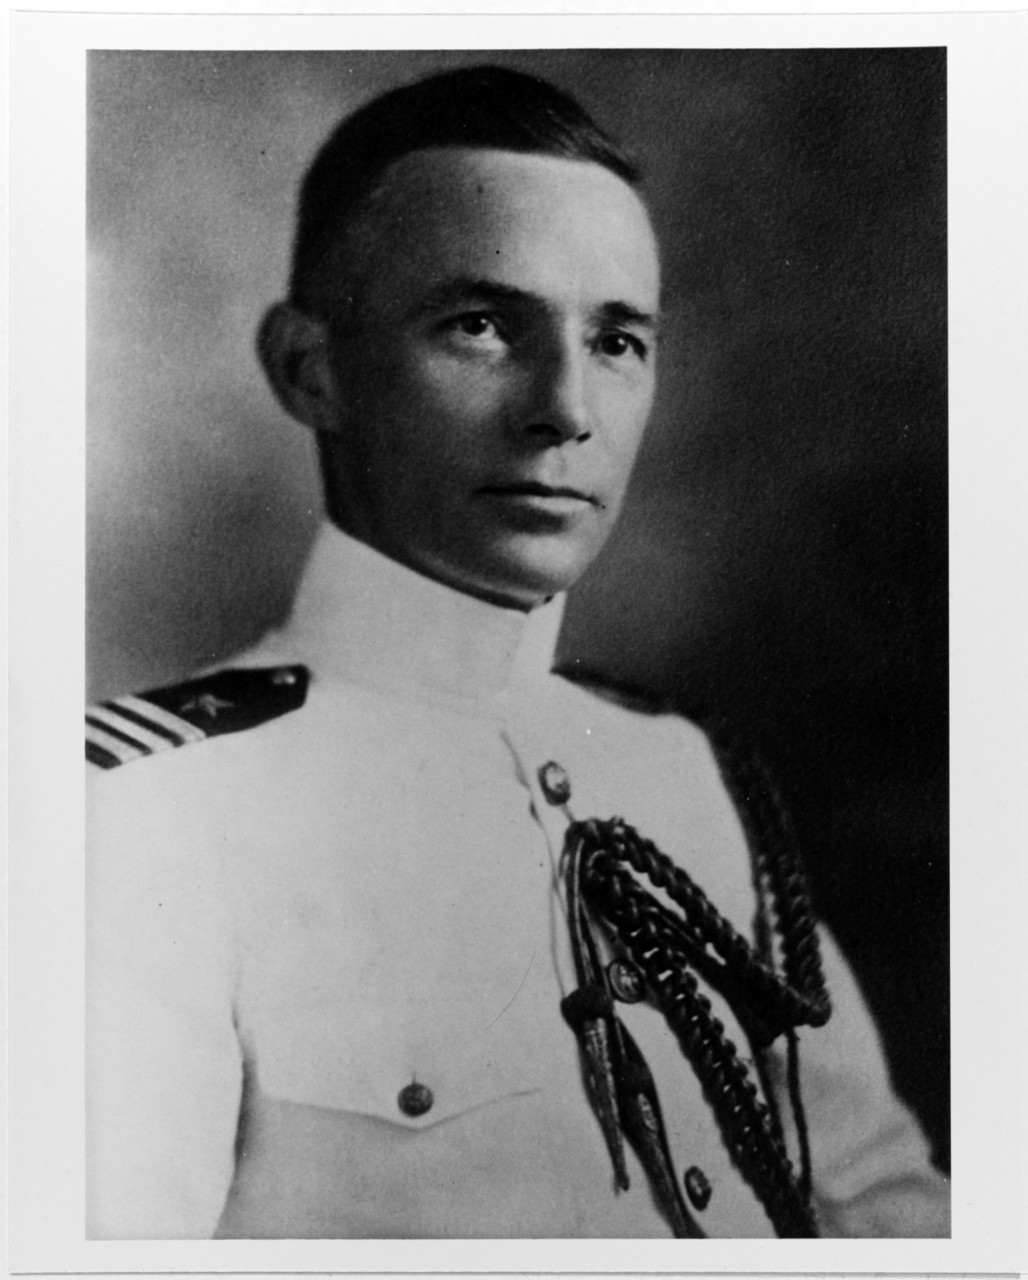 Andrew F. Carter, Commander, USN